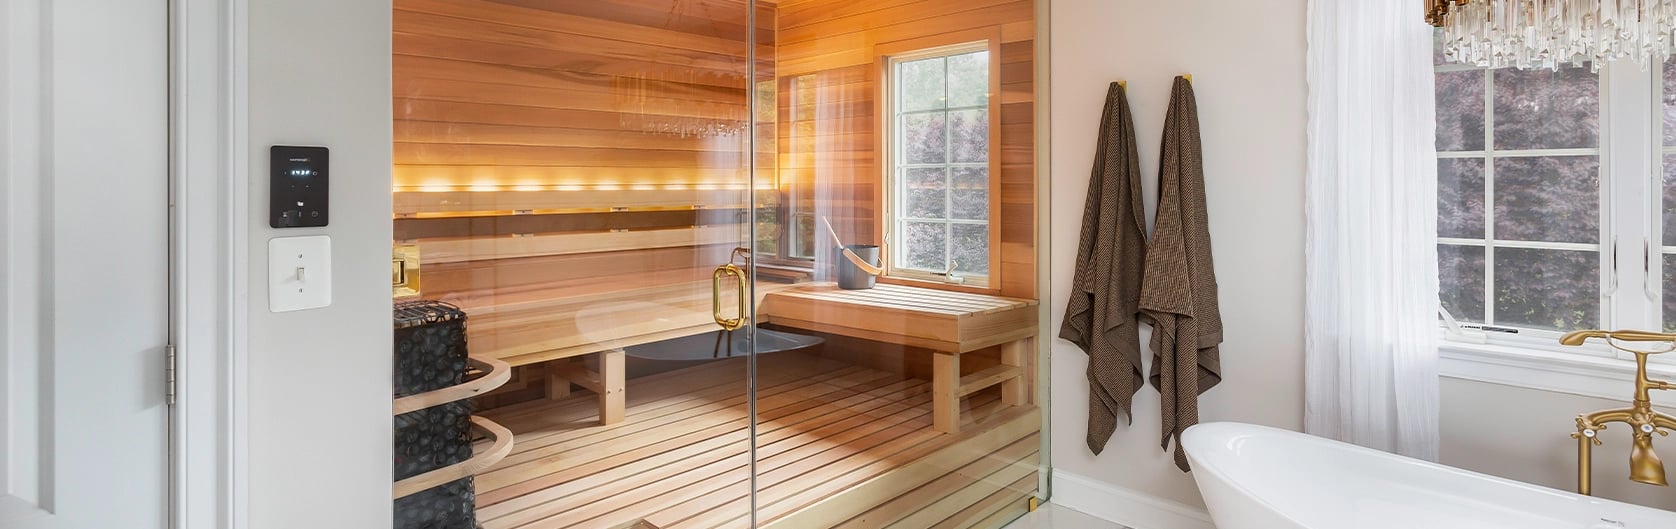 Traditional Finnish Sauna - Indoor